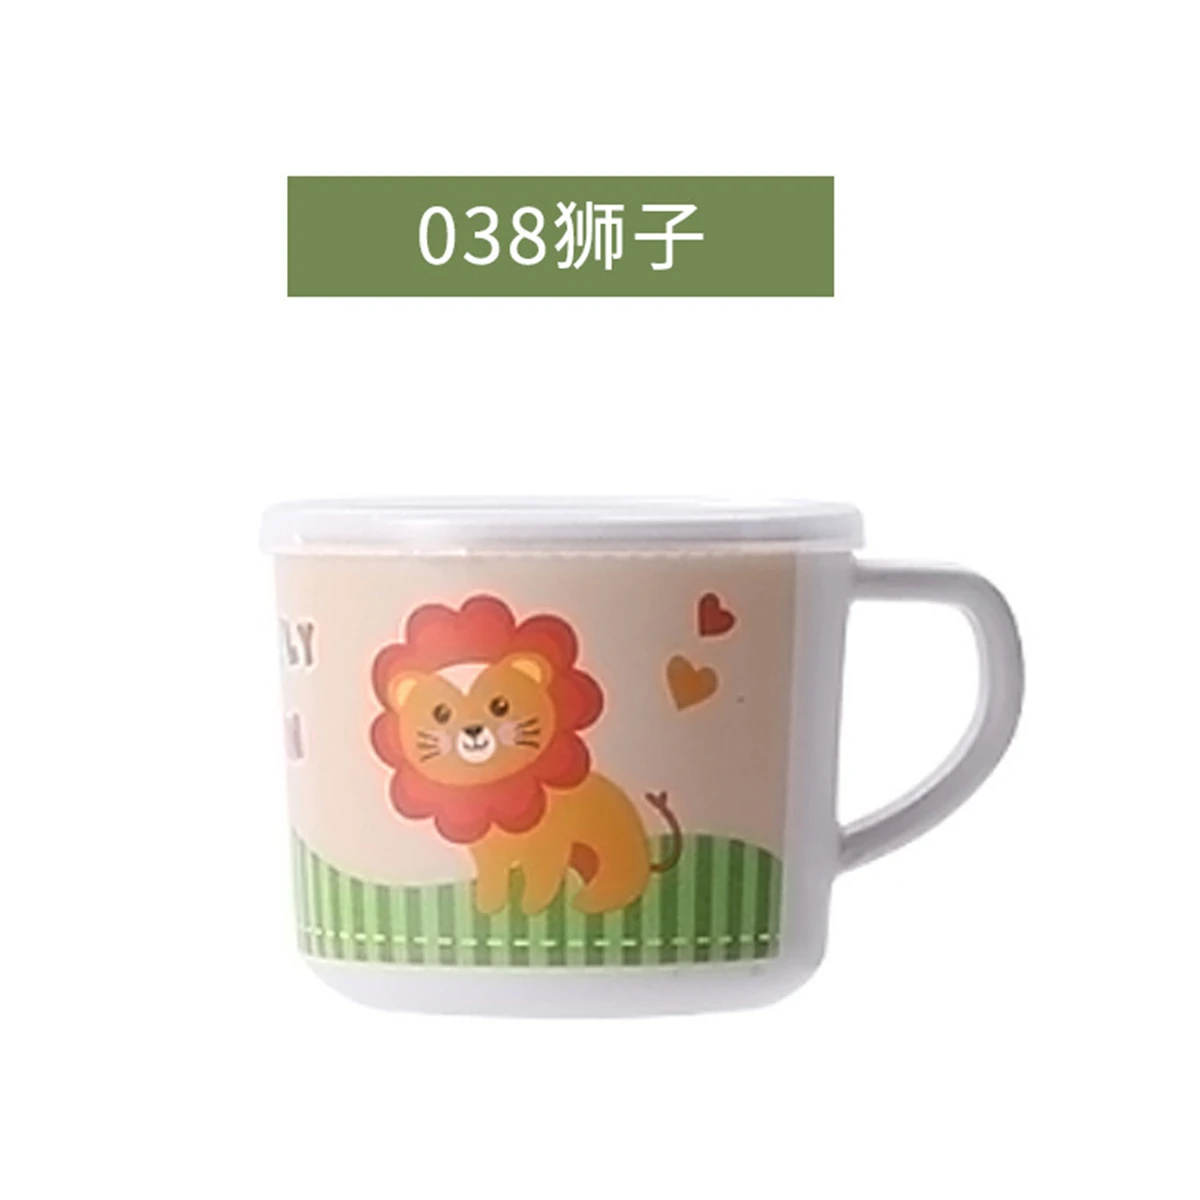 200mL Kawaii Cartoon Animals Bamboo Fiber Mugs Cup with Handgrip for Kids Baby Children enlarge